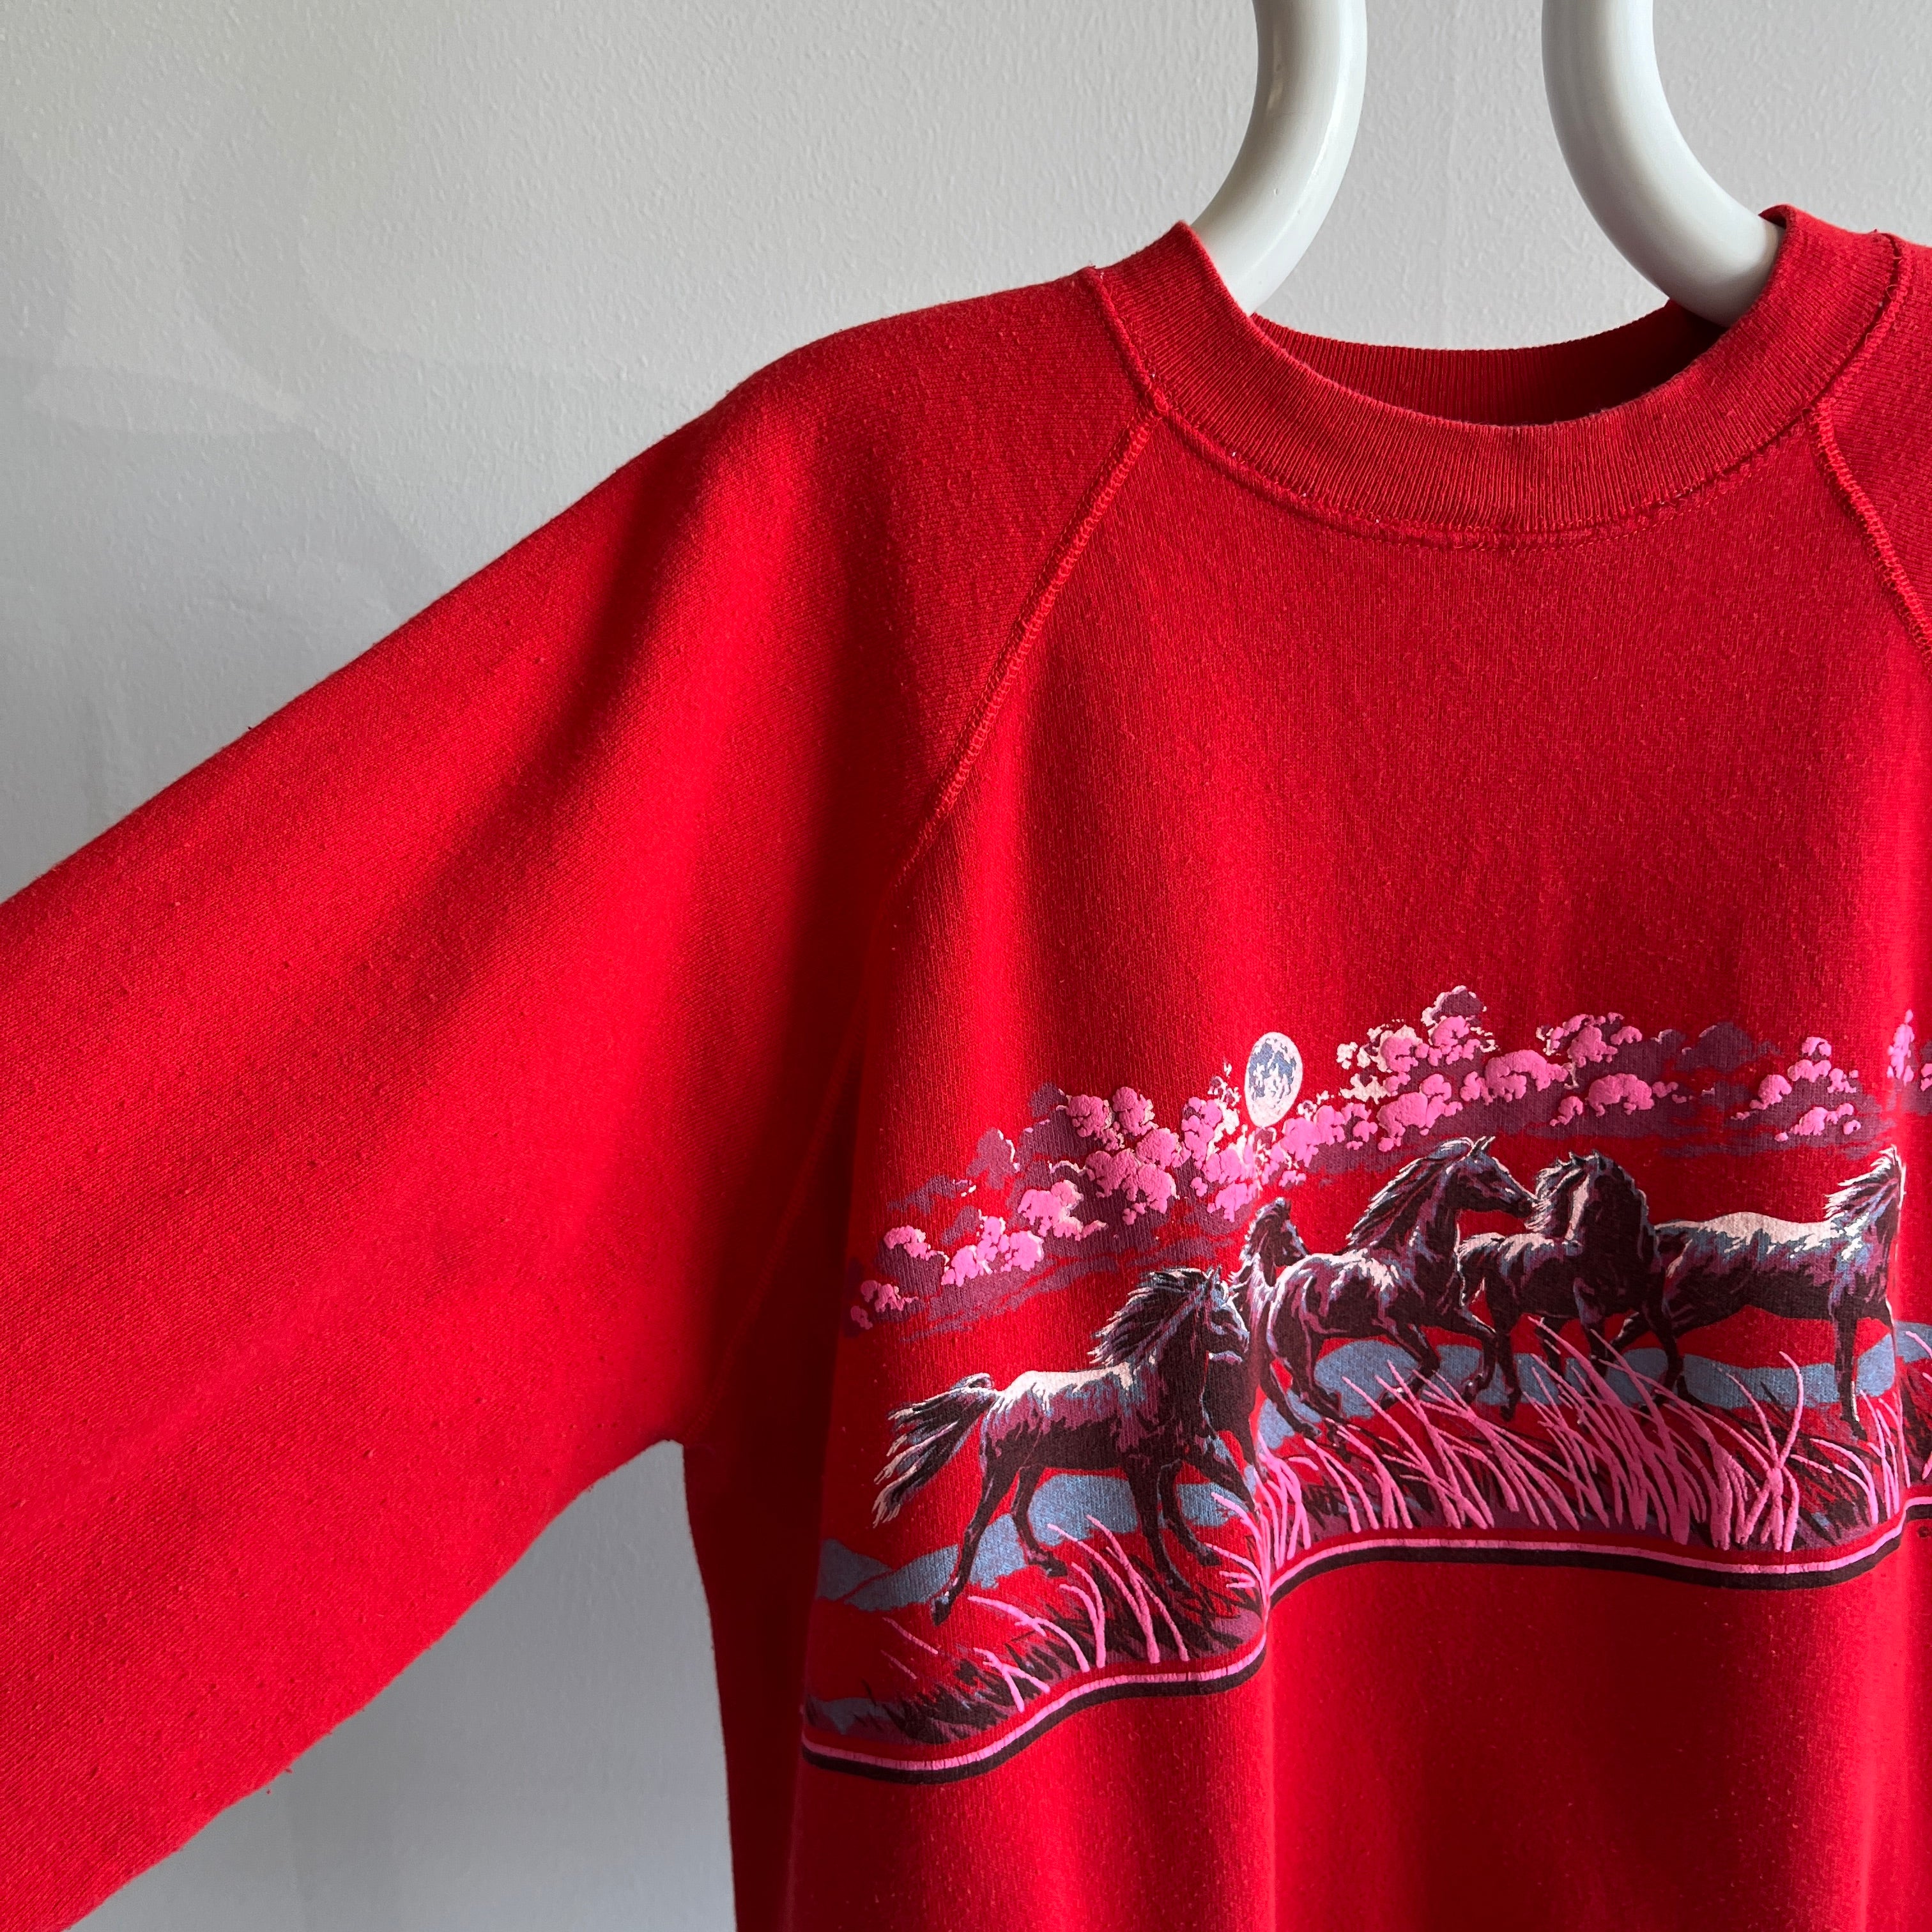 1990 Horses Galloping Wrap Around Sweatshirt - THIS!